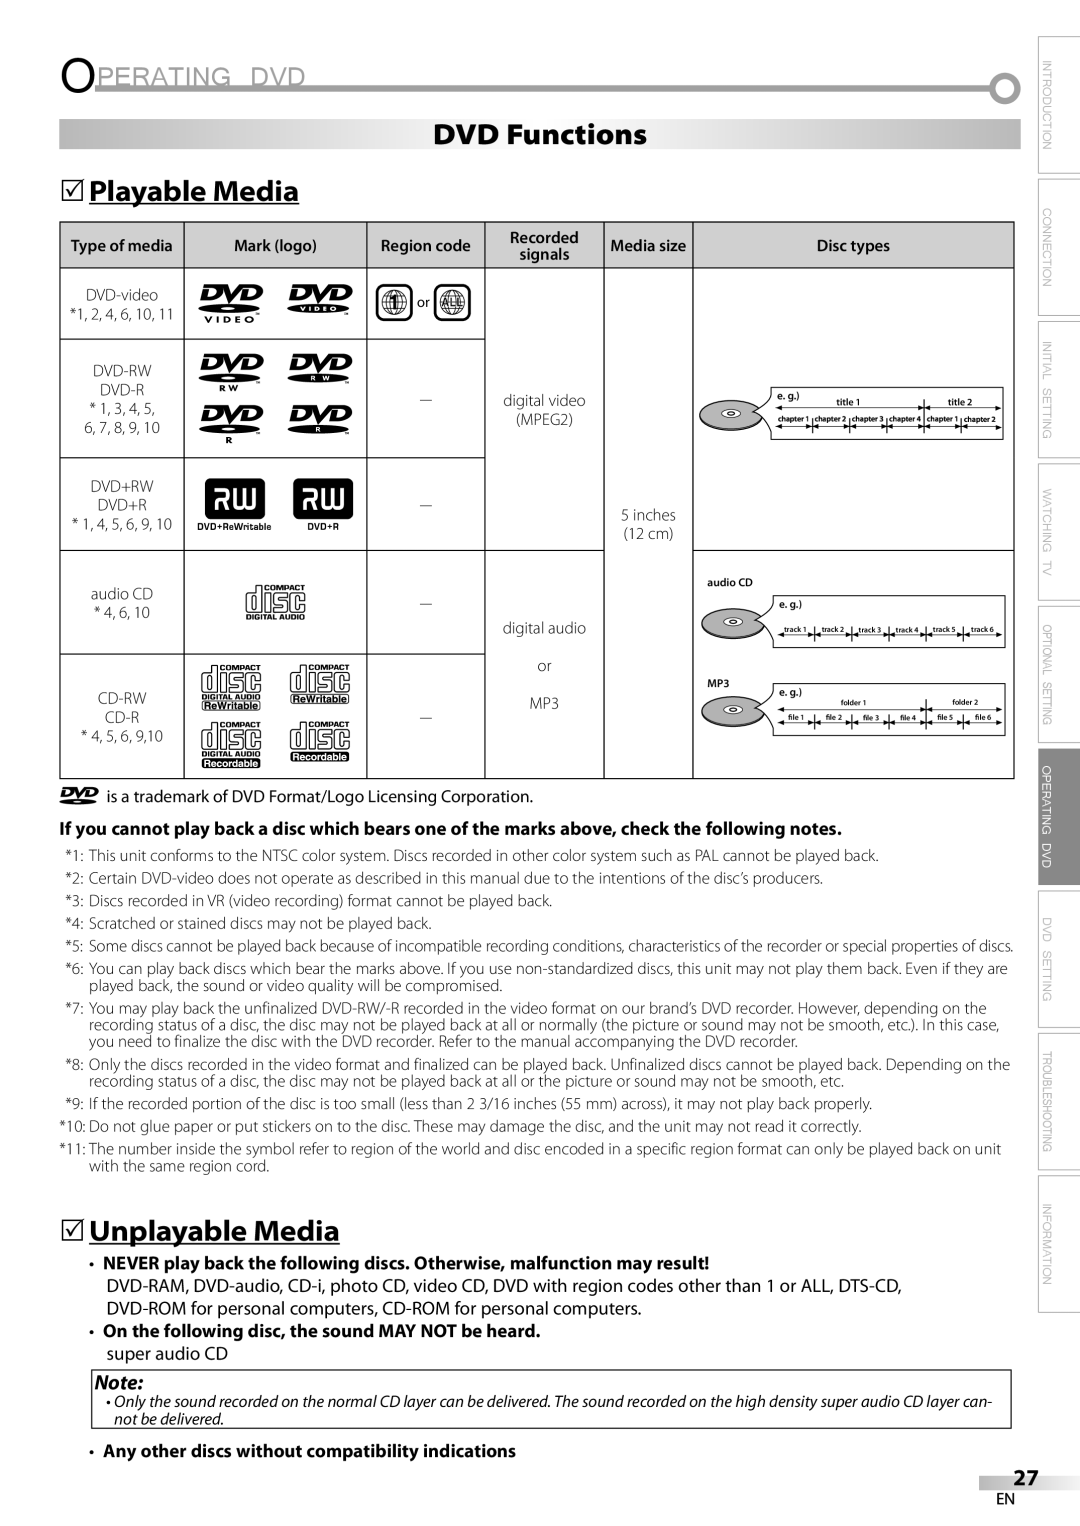 Sylvania LD200SL8 Operating Dvd, DVD Functions 5Playable Media, 5Unplayable Media, Information, Mark logo, Region code 